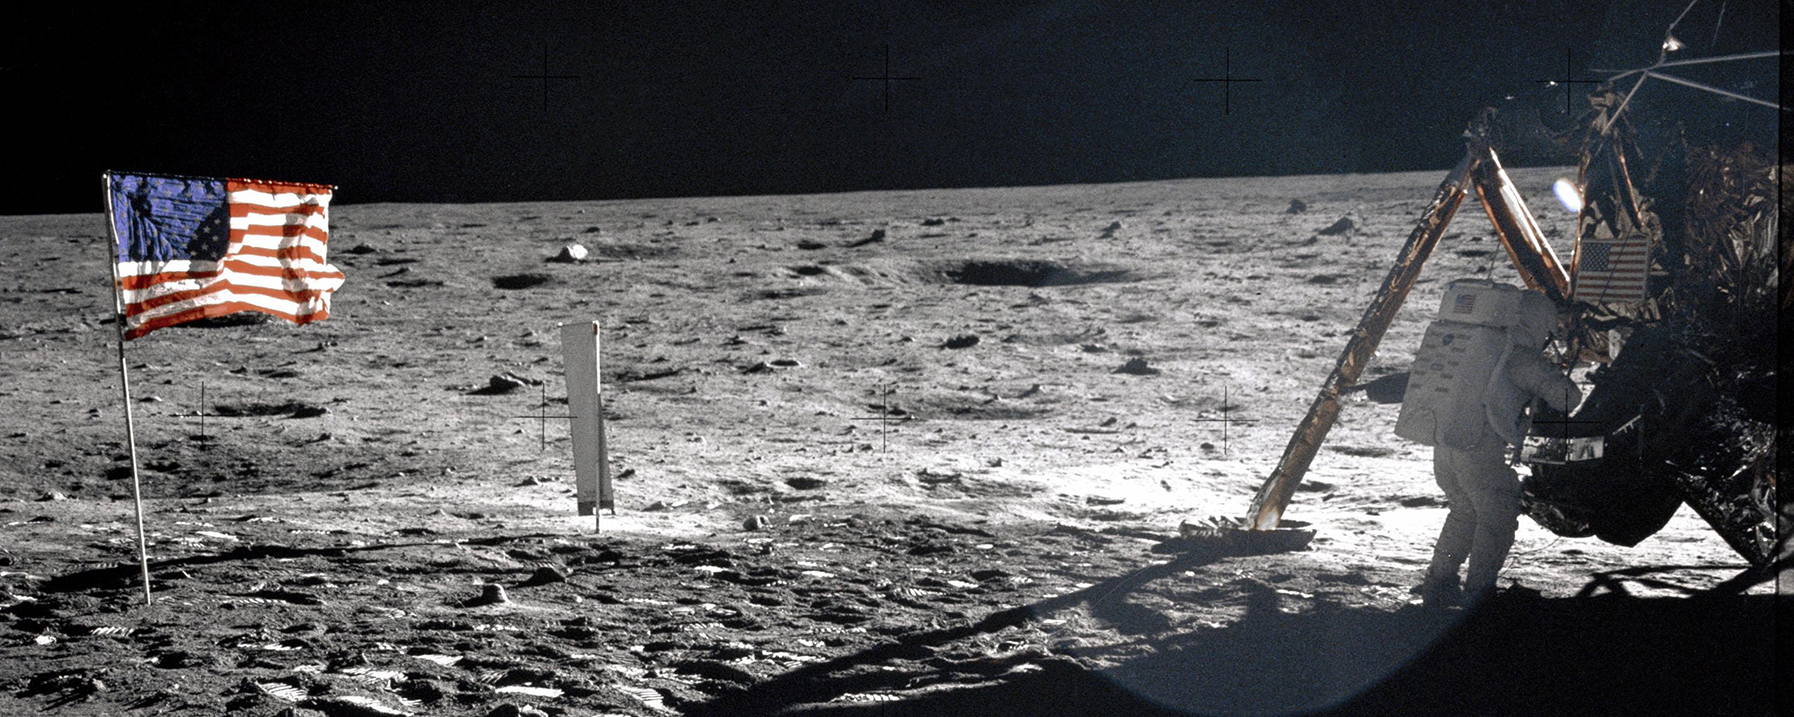 Apollo 11 Landing